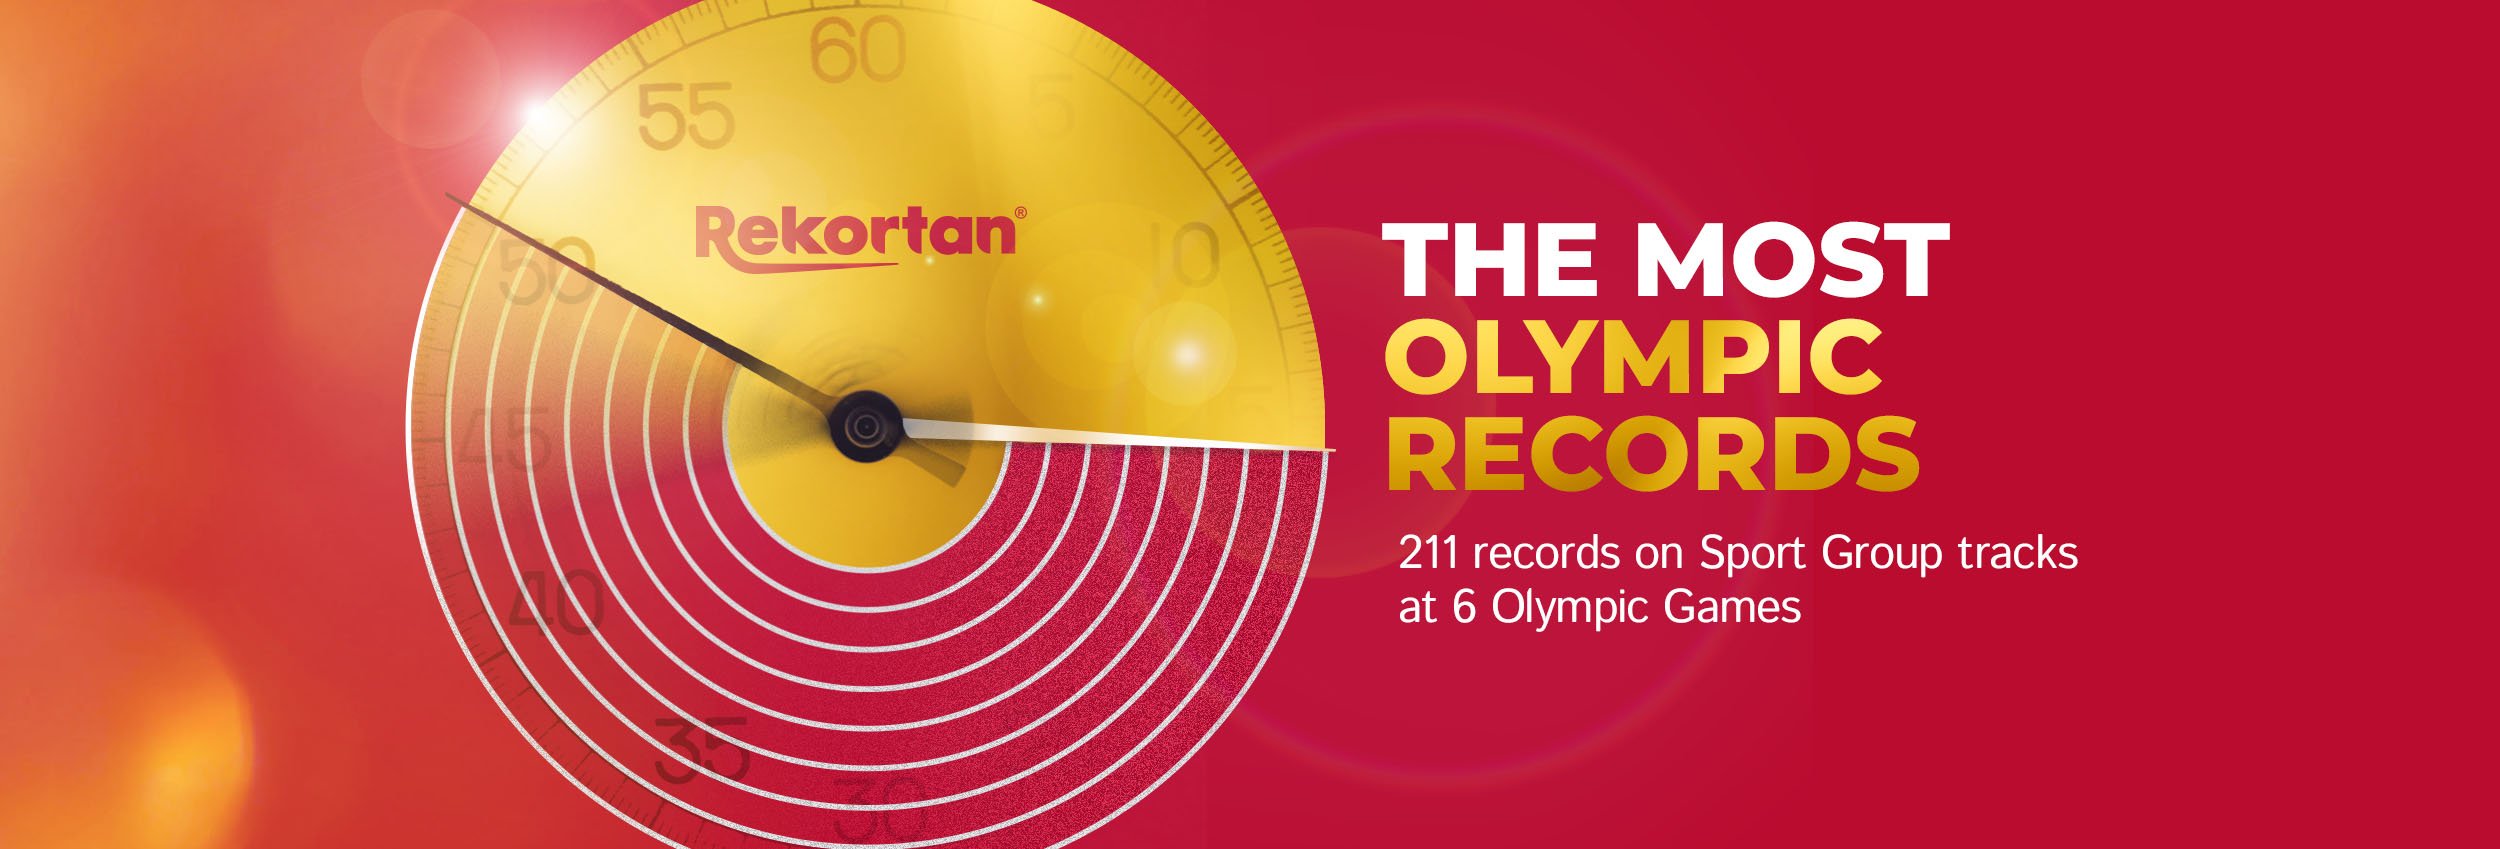 Rekortan-News-LG-2500x849-HomeSlider_Most Olympic Records.jpg